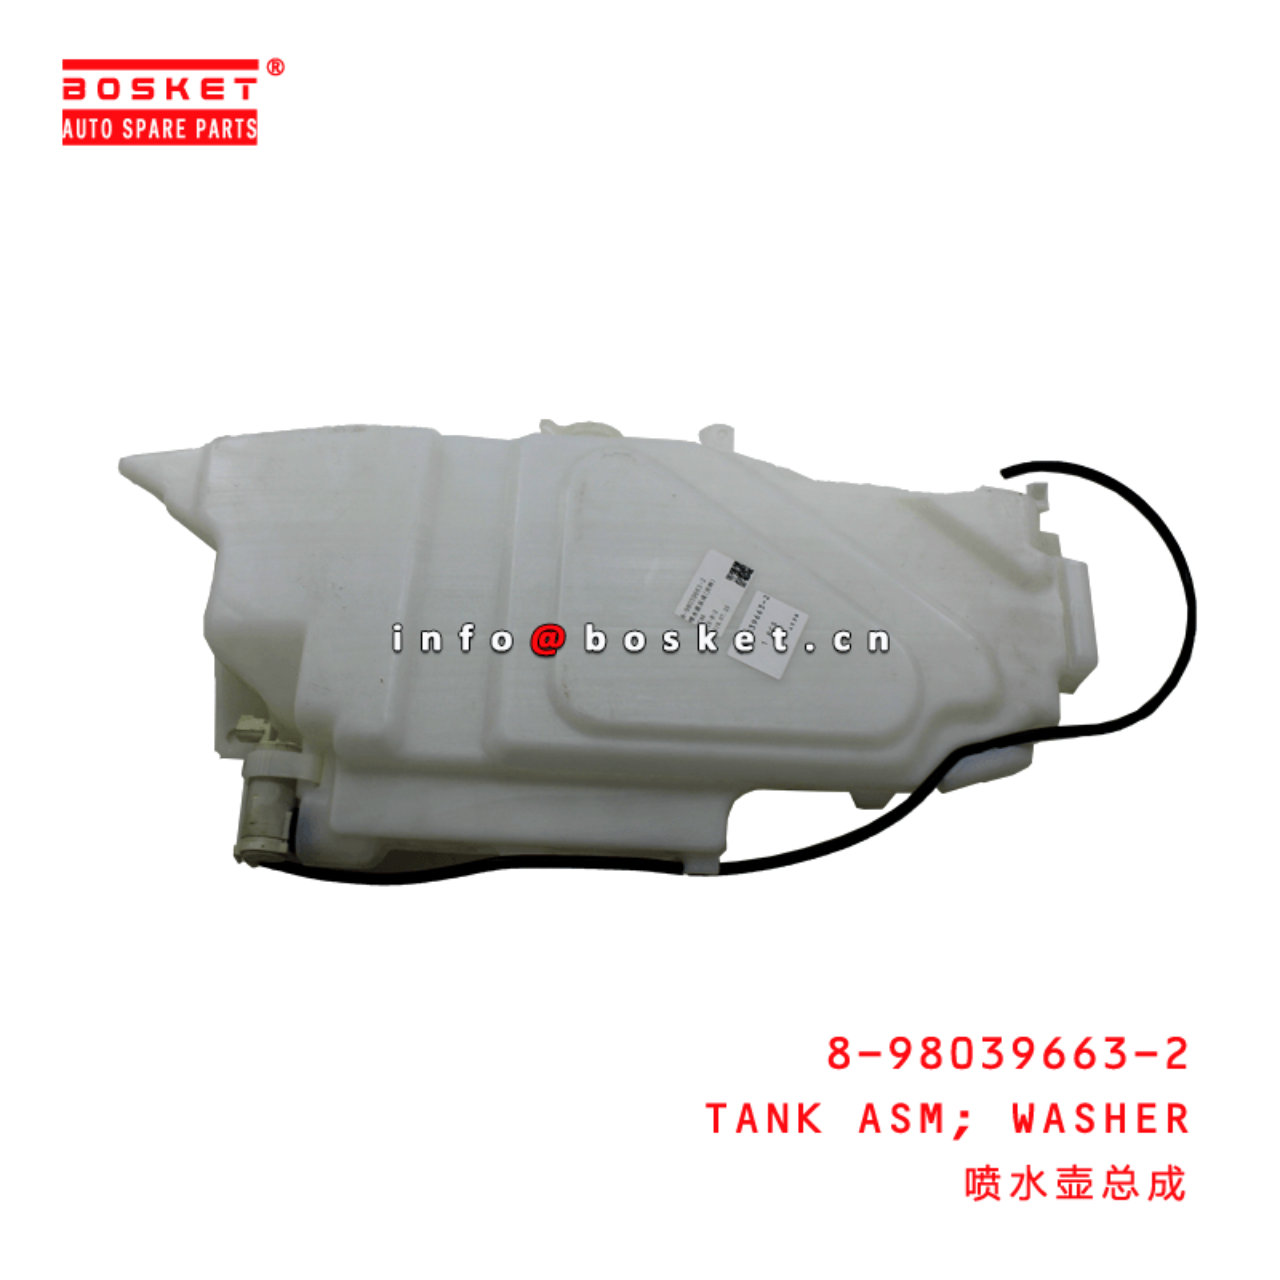  8-98039663-2 Washer Tank Assembly 8980396632 Suitable for ISUZU VC46 6UZ1